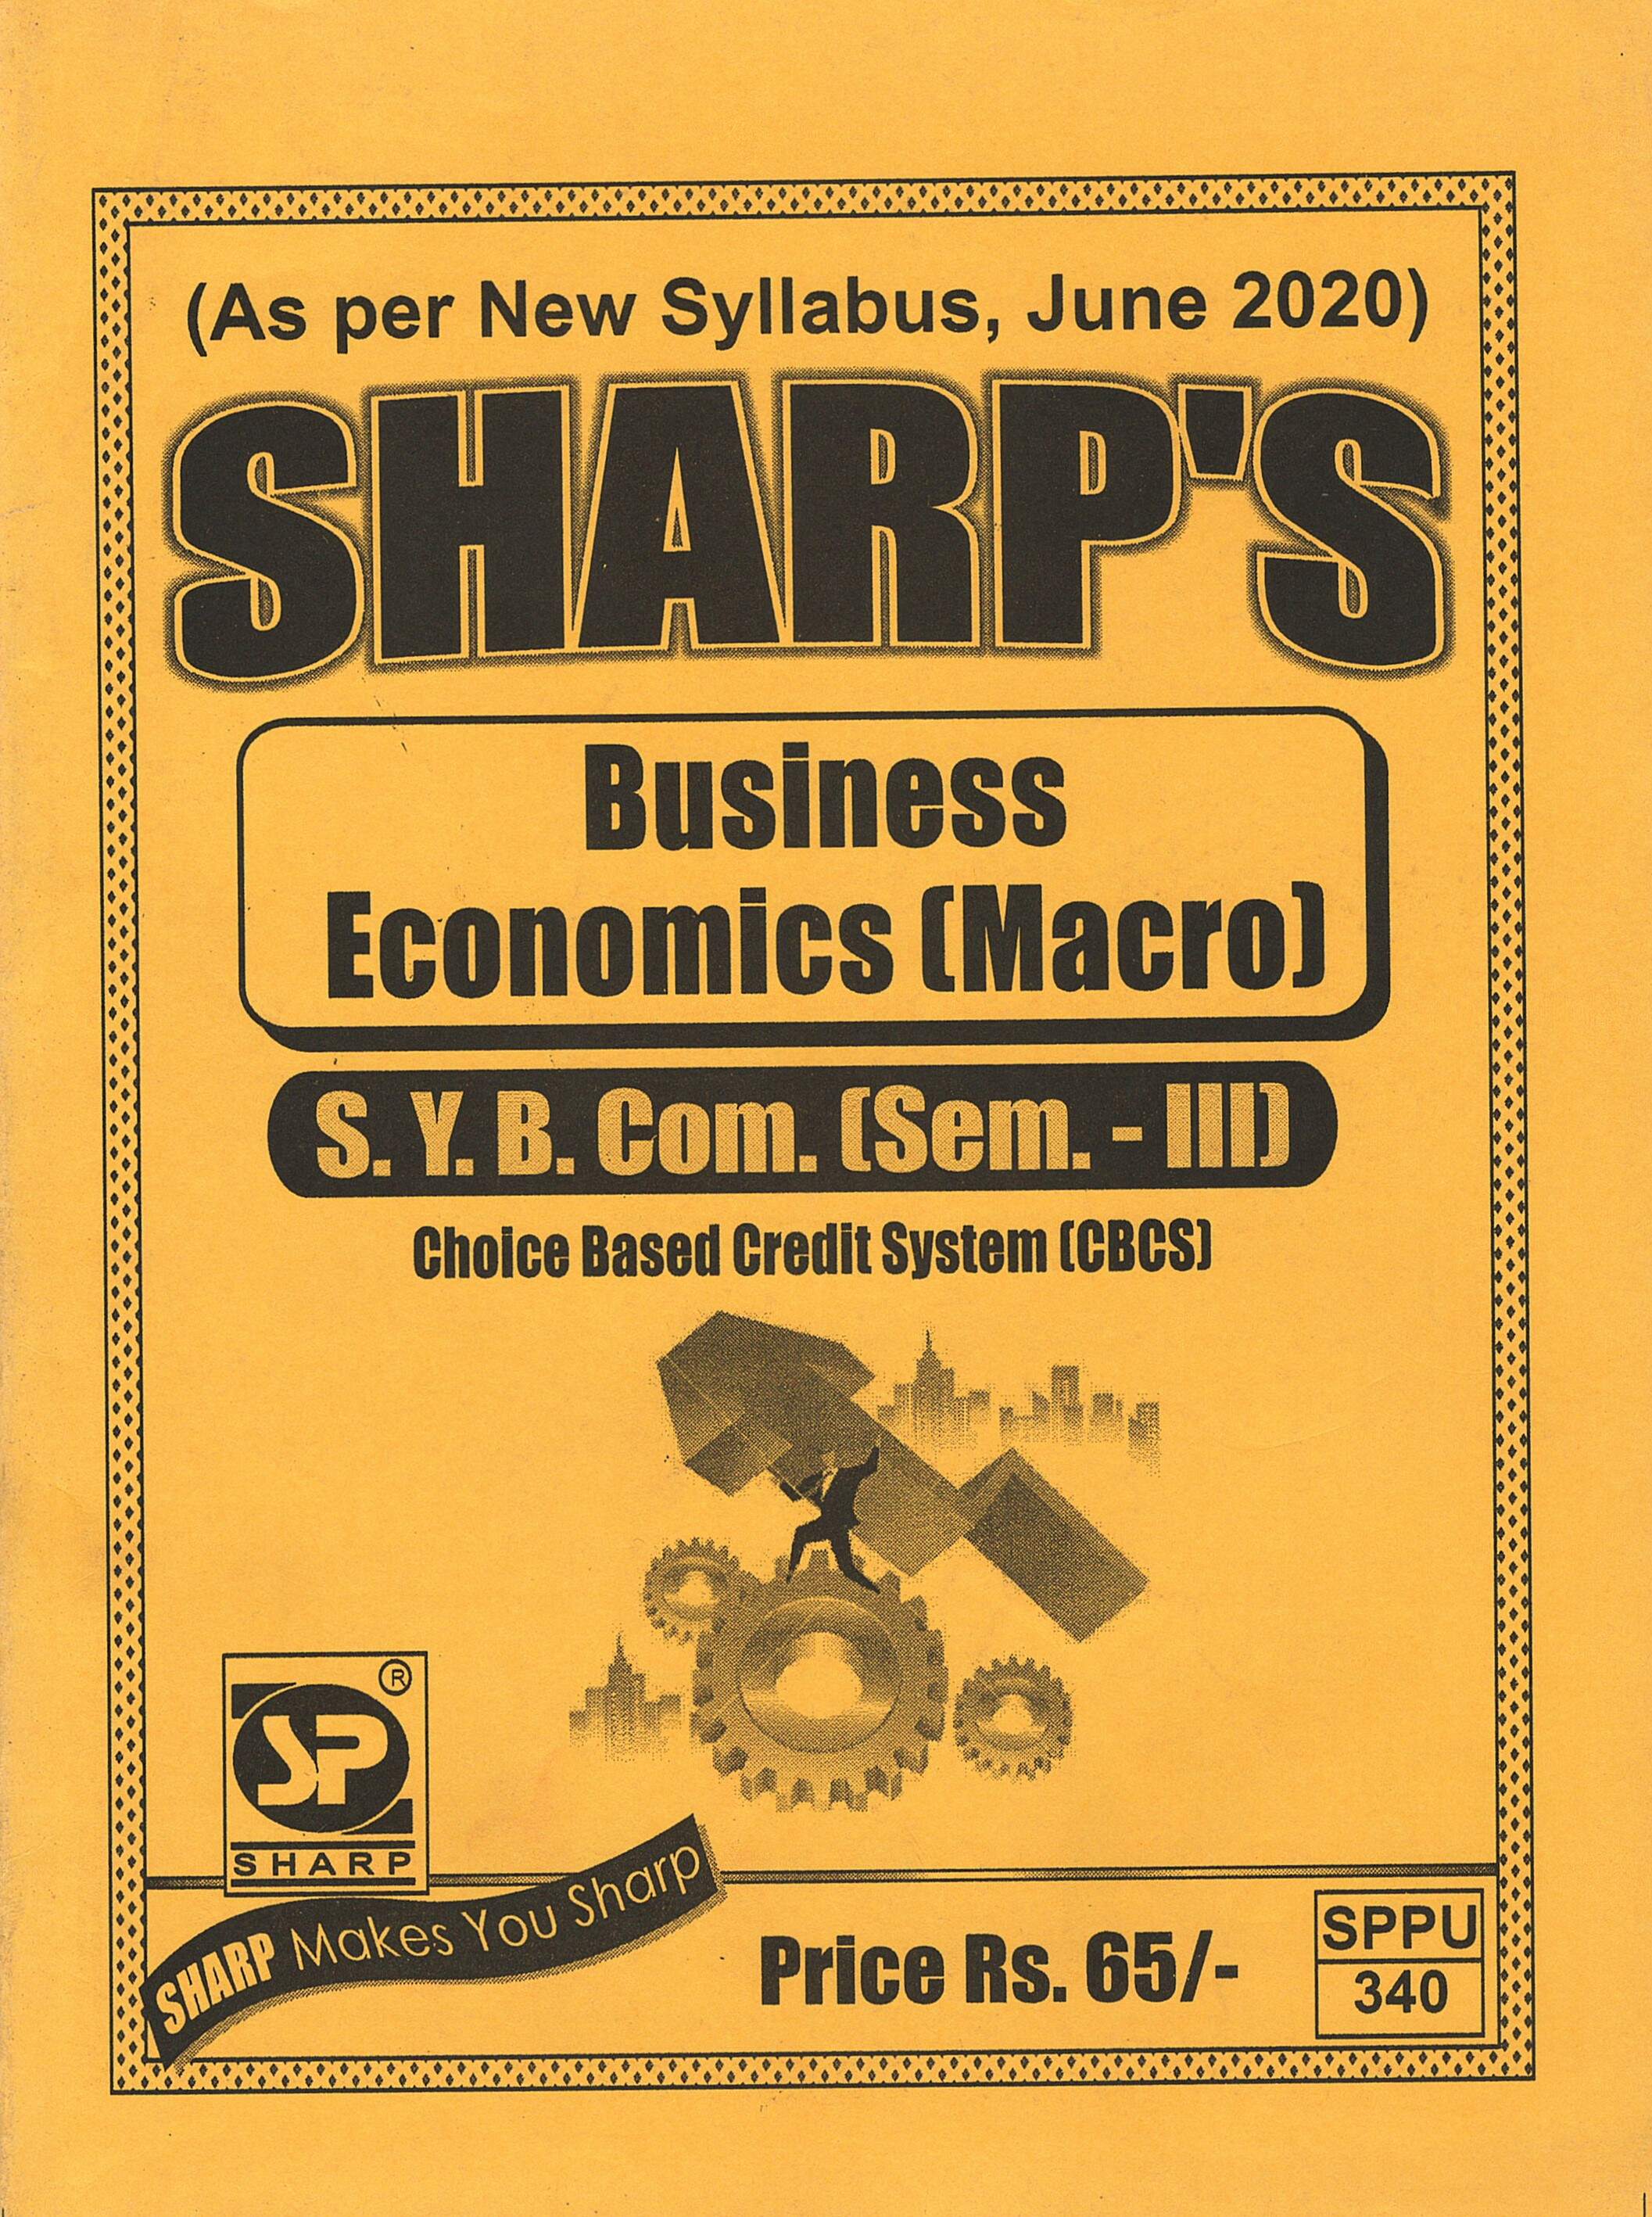 Business Economics (Marco)